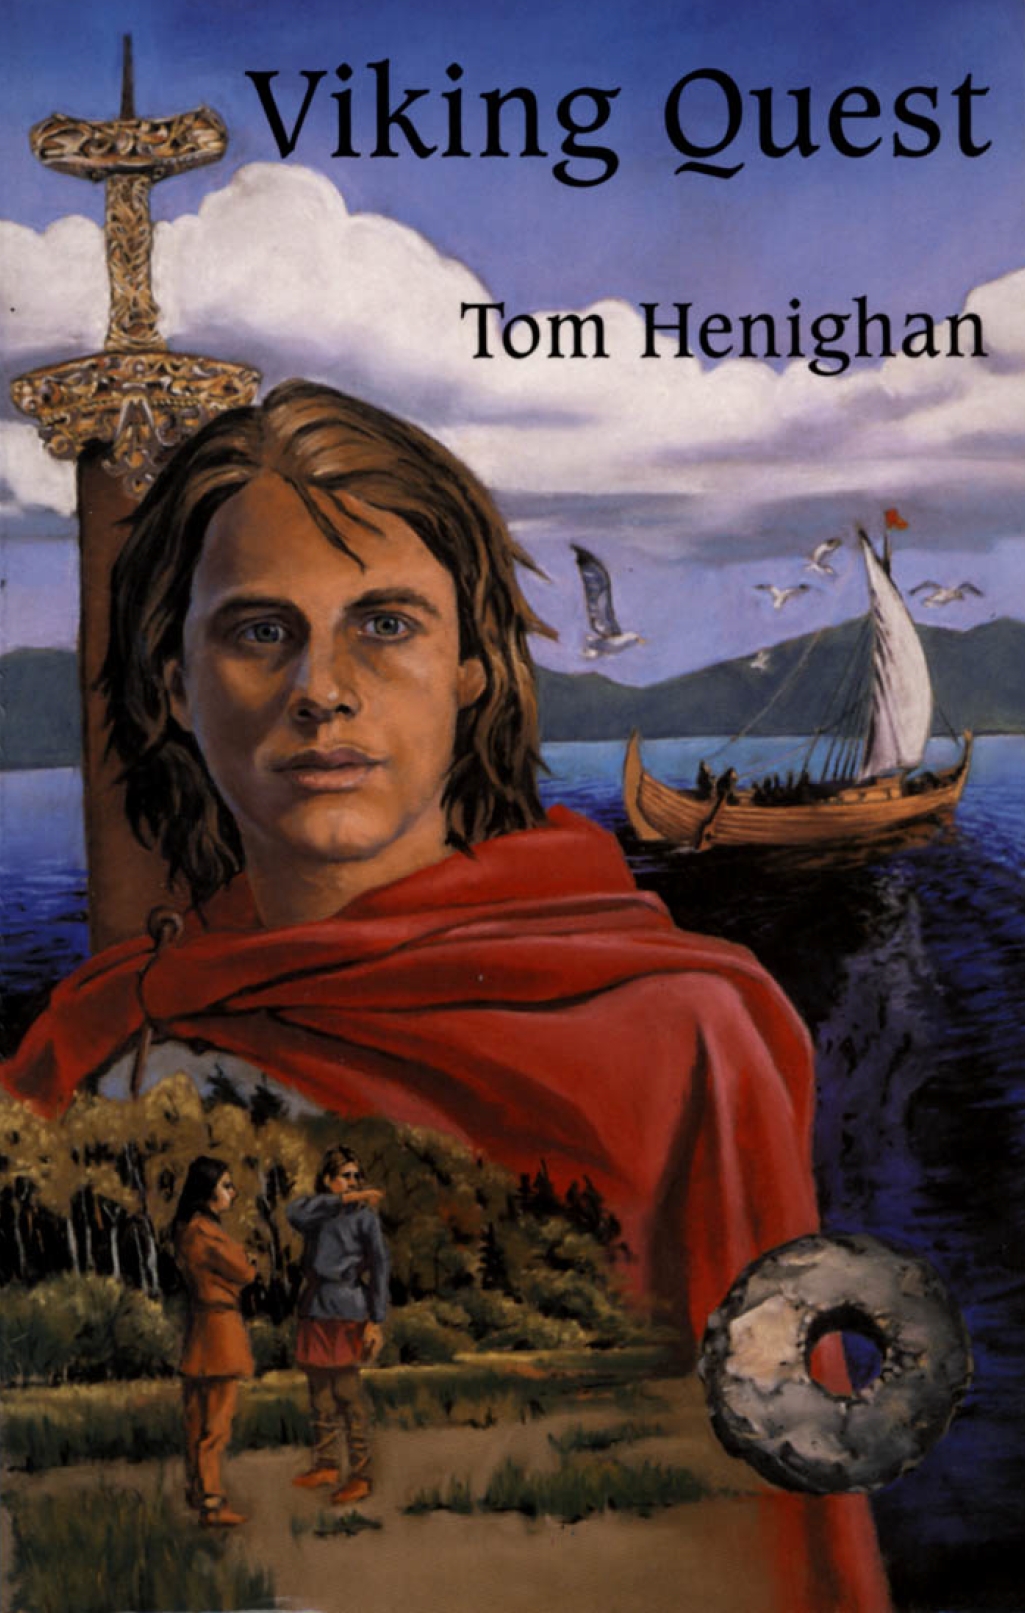 Читать романы про викингов шотландцев. Книга Викинги. Tom Quest. Романы про викингов. Vikings Quest.